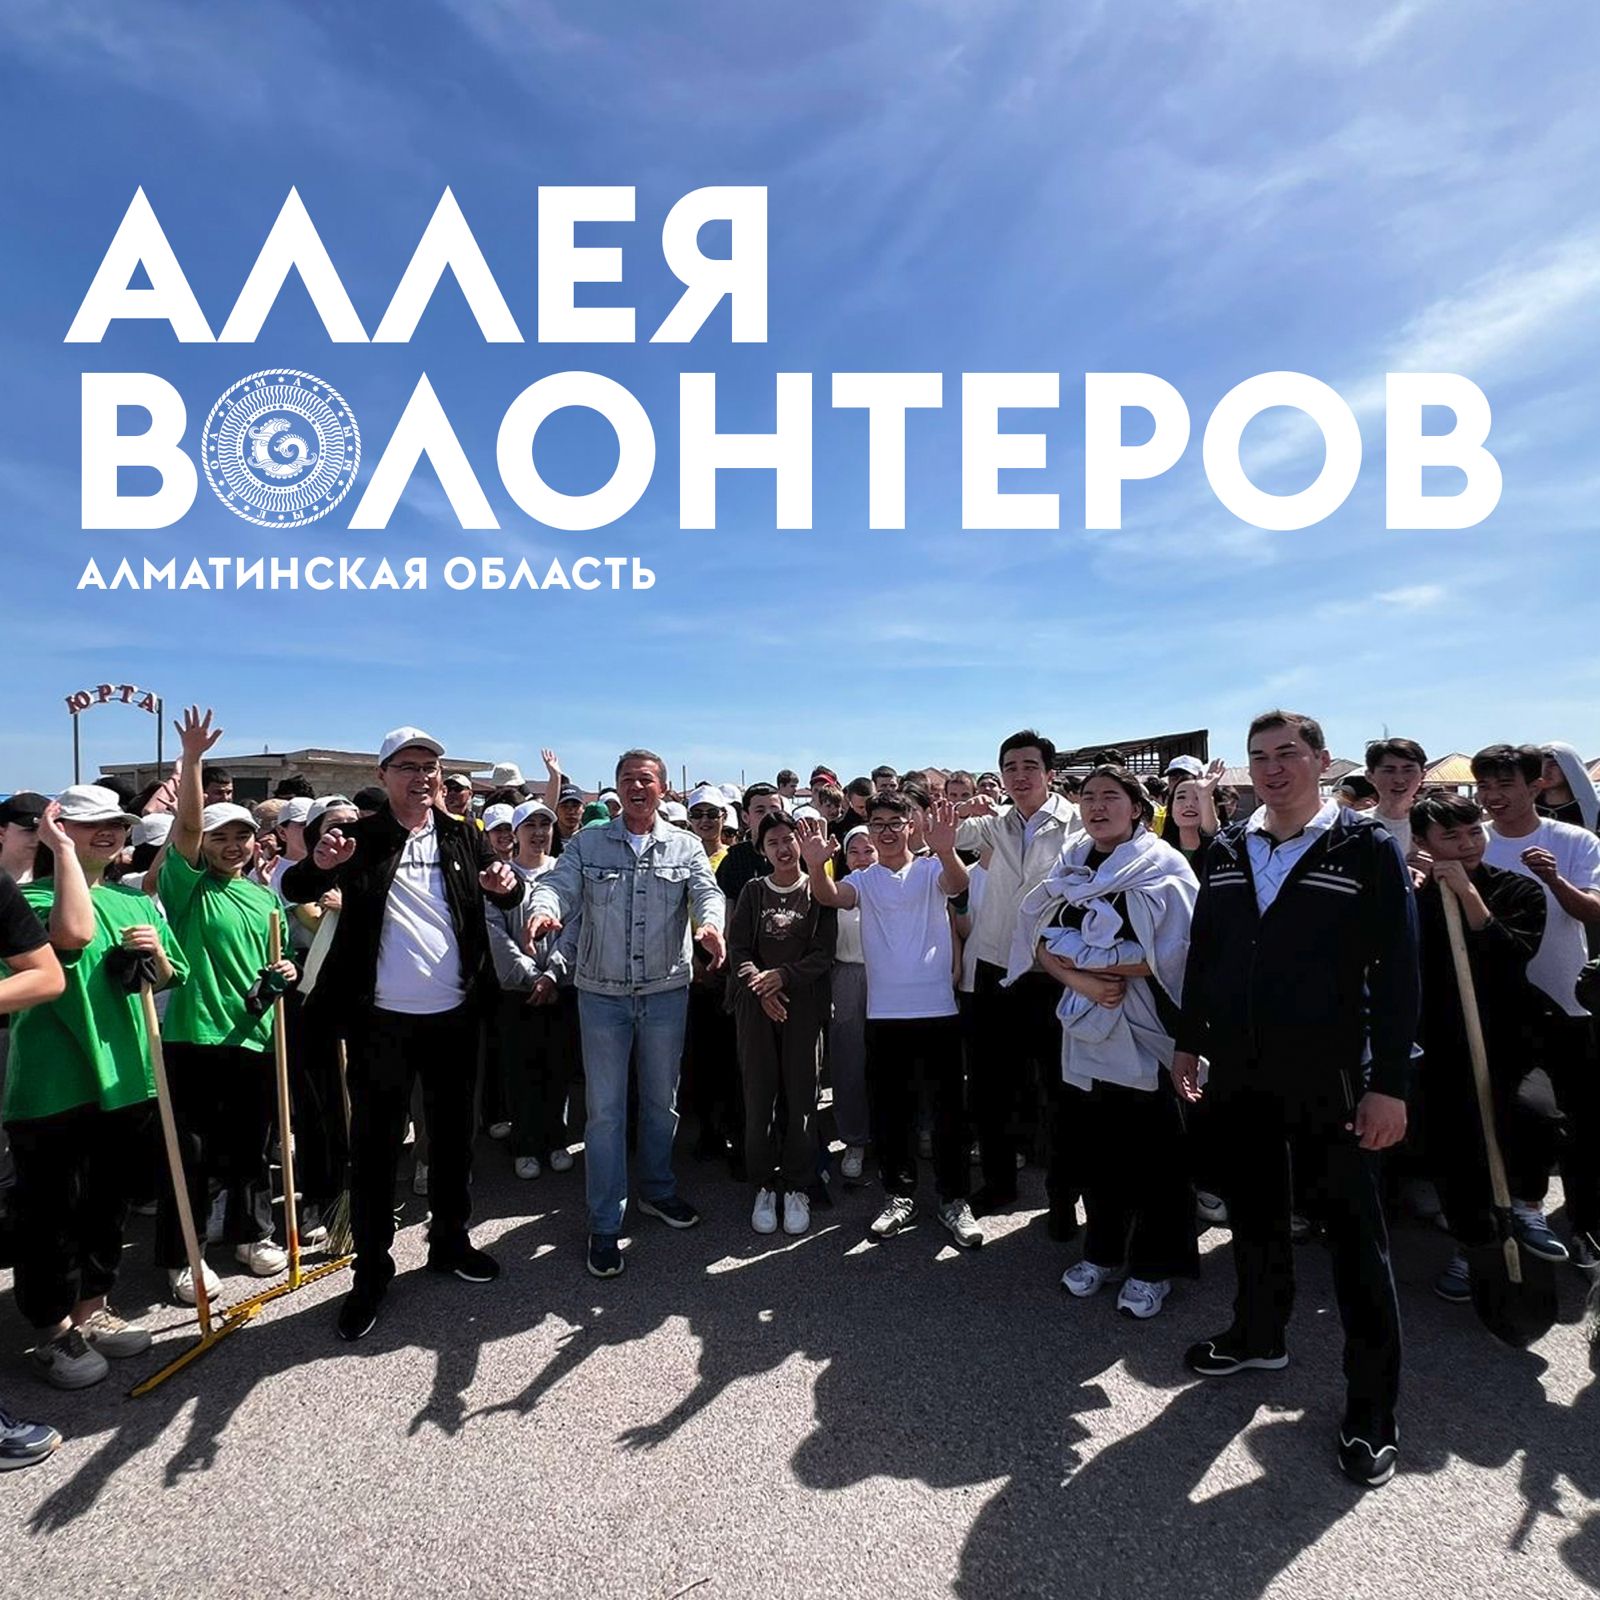 The alley of volunteers appeared in the Almaty region